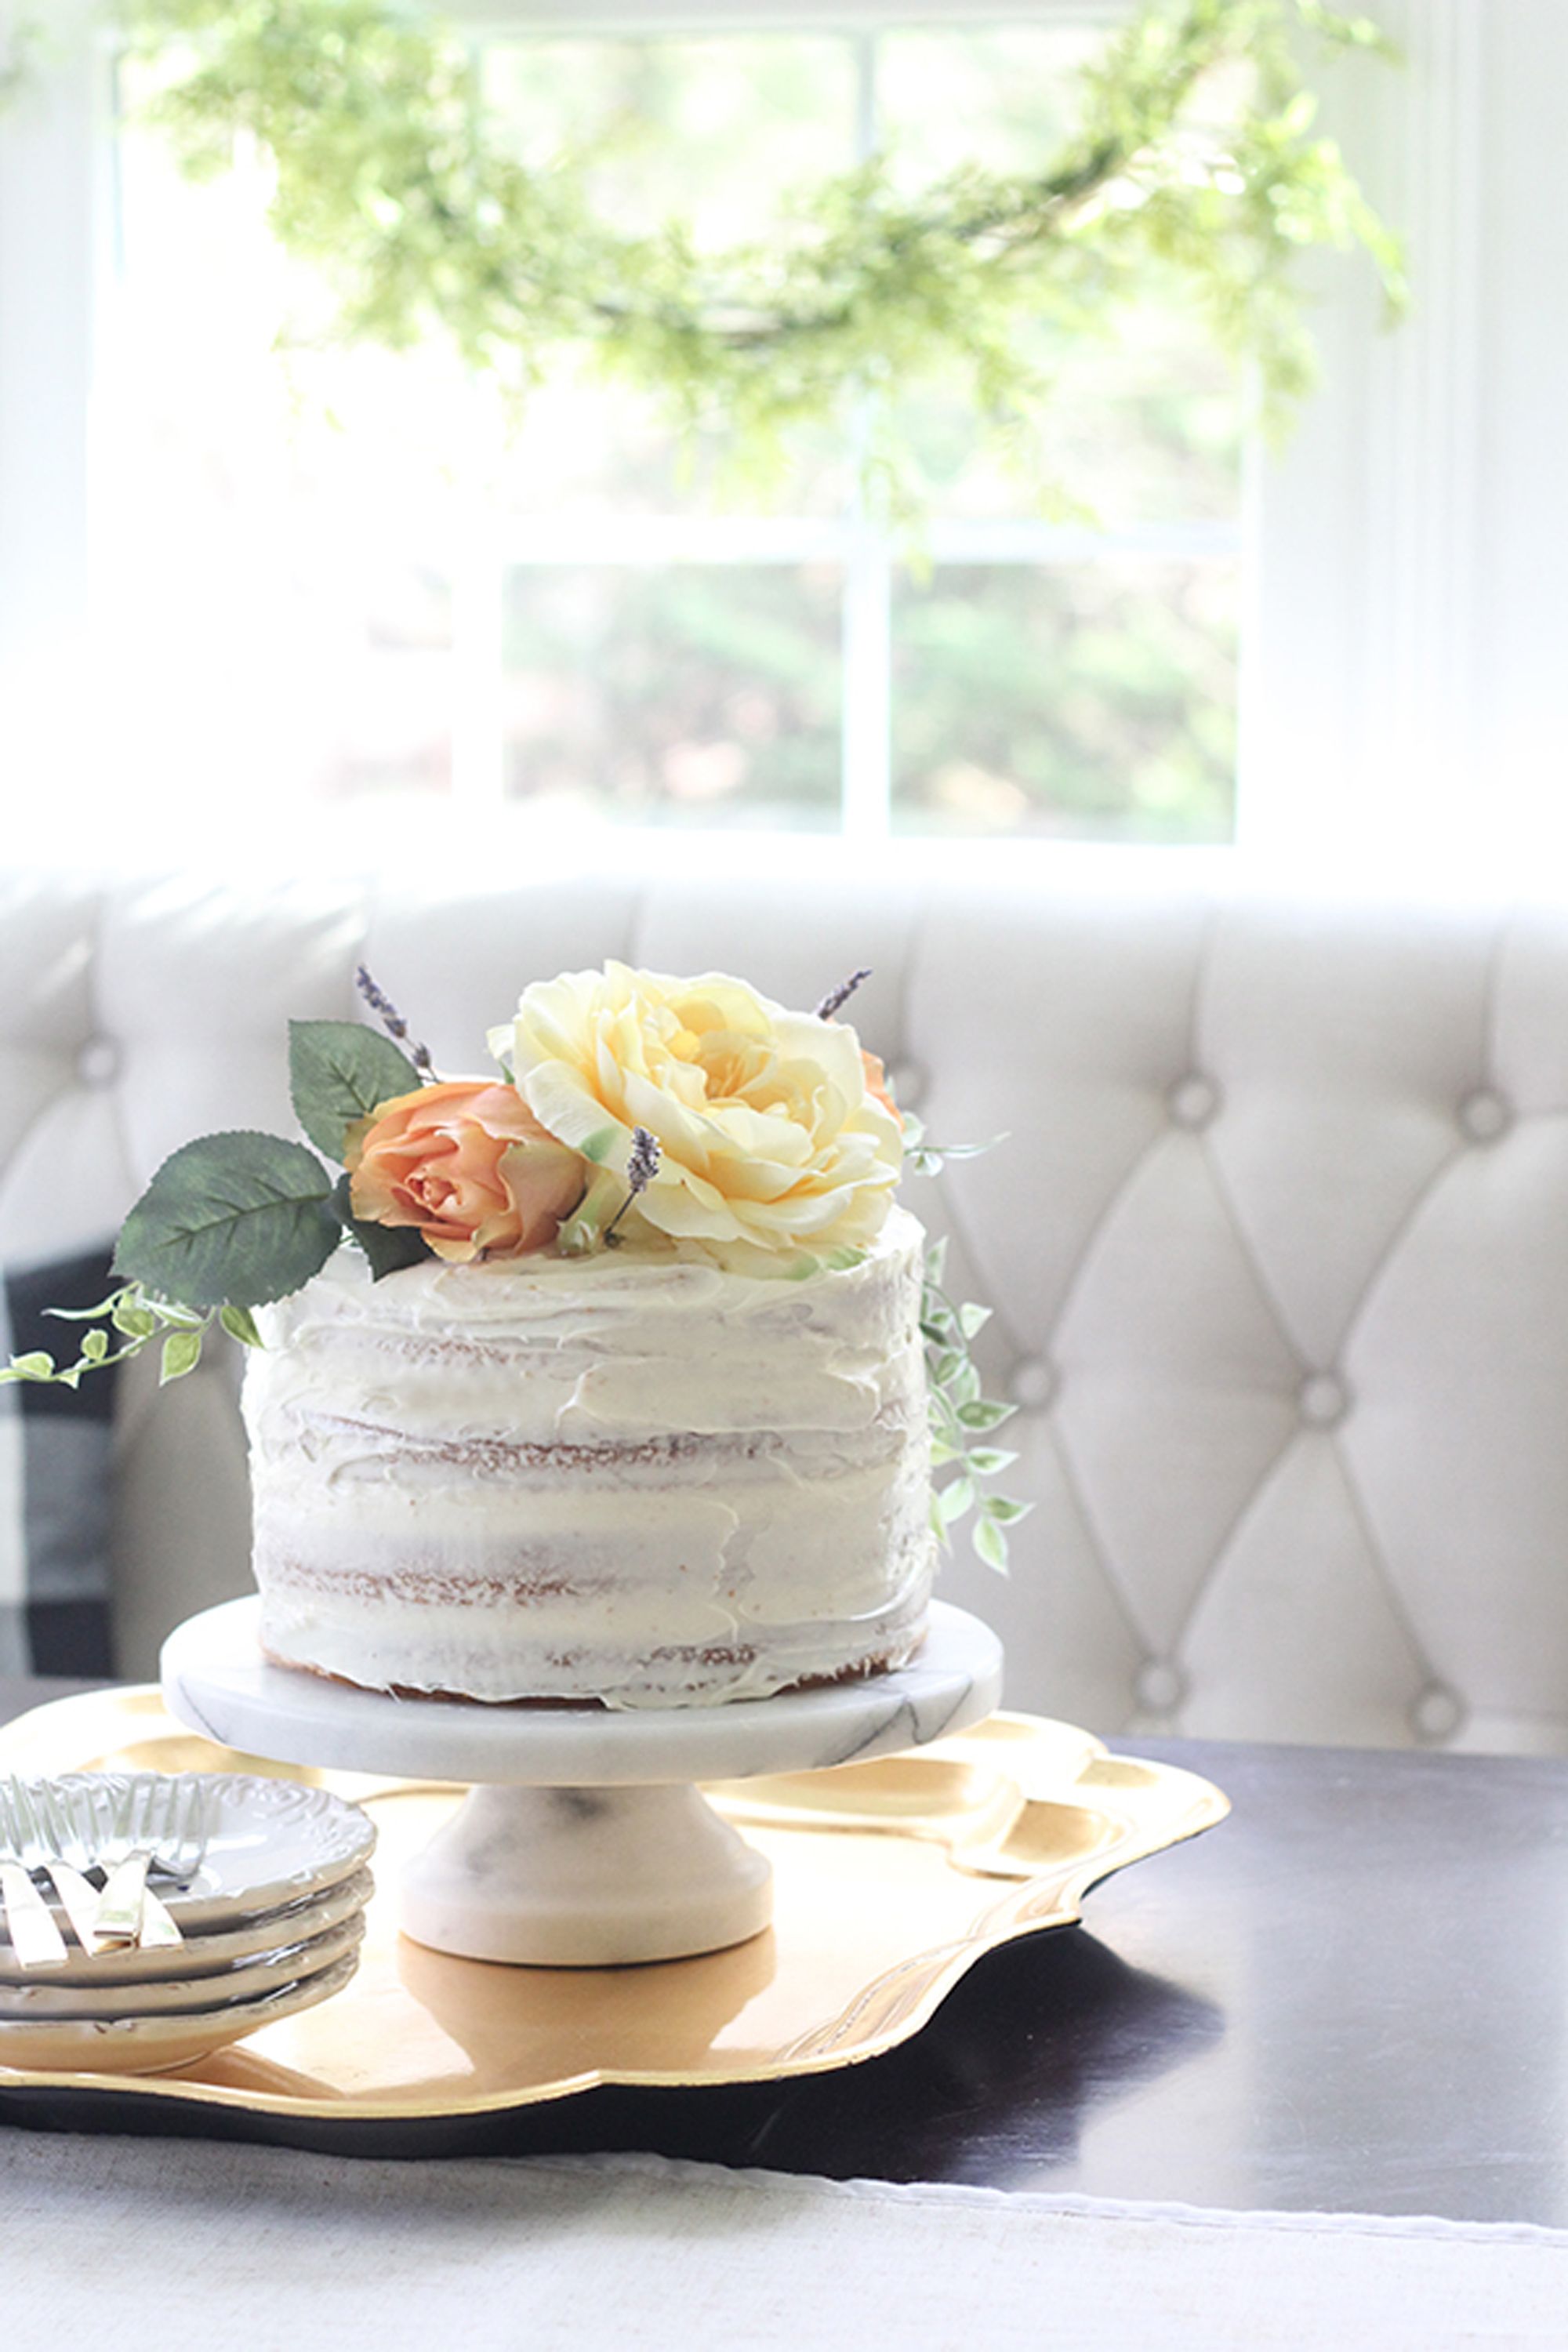 25 Best Homemade Wedding Cake Recipes